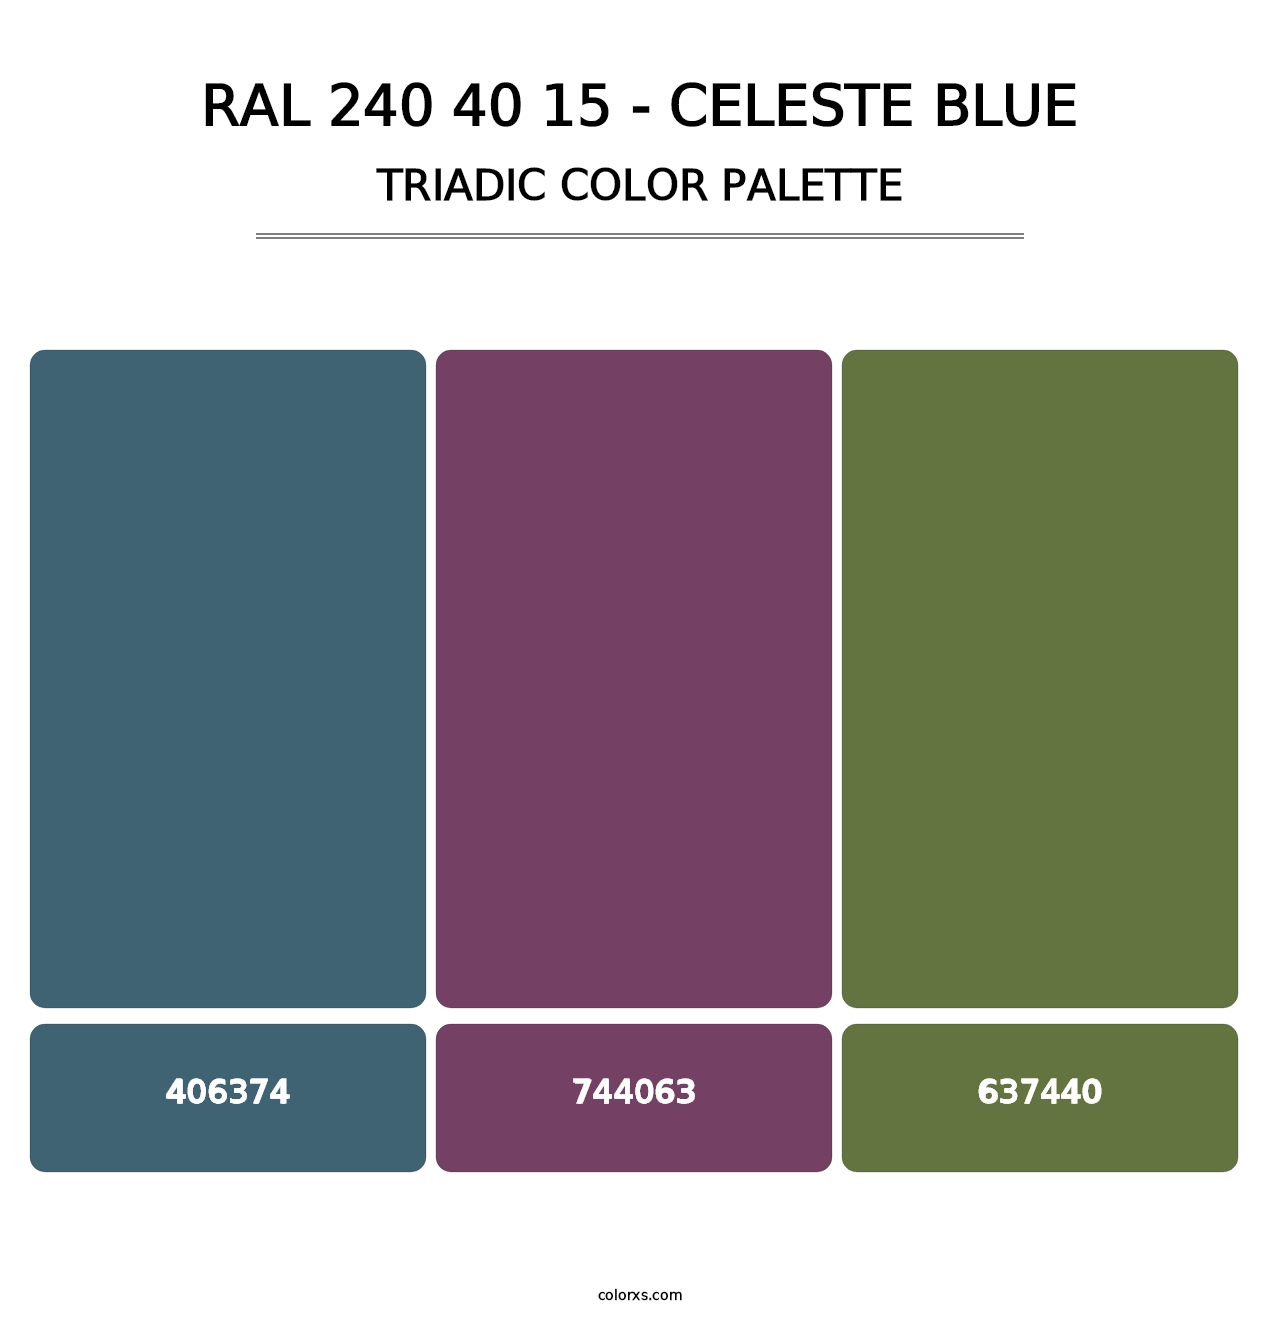 RAL 240 40 15 - Celeste Blue - Triadic Color Palette